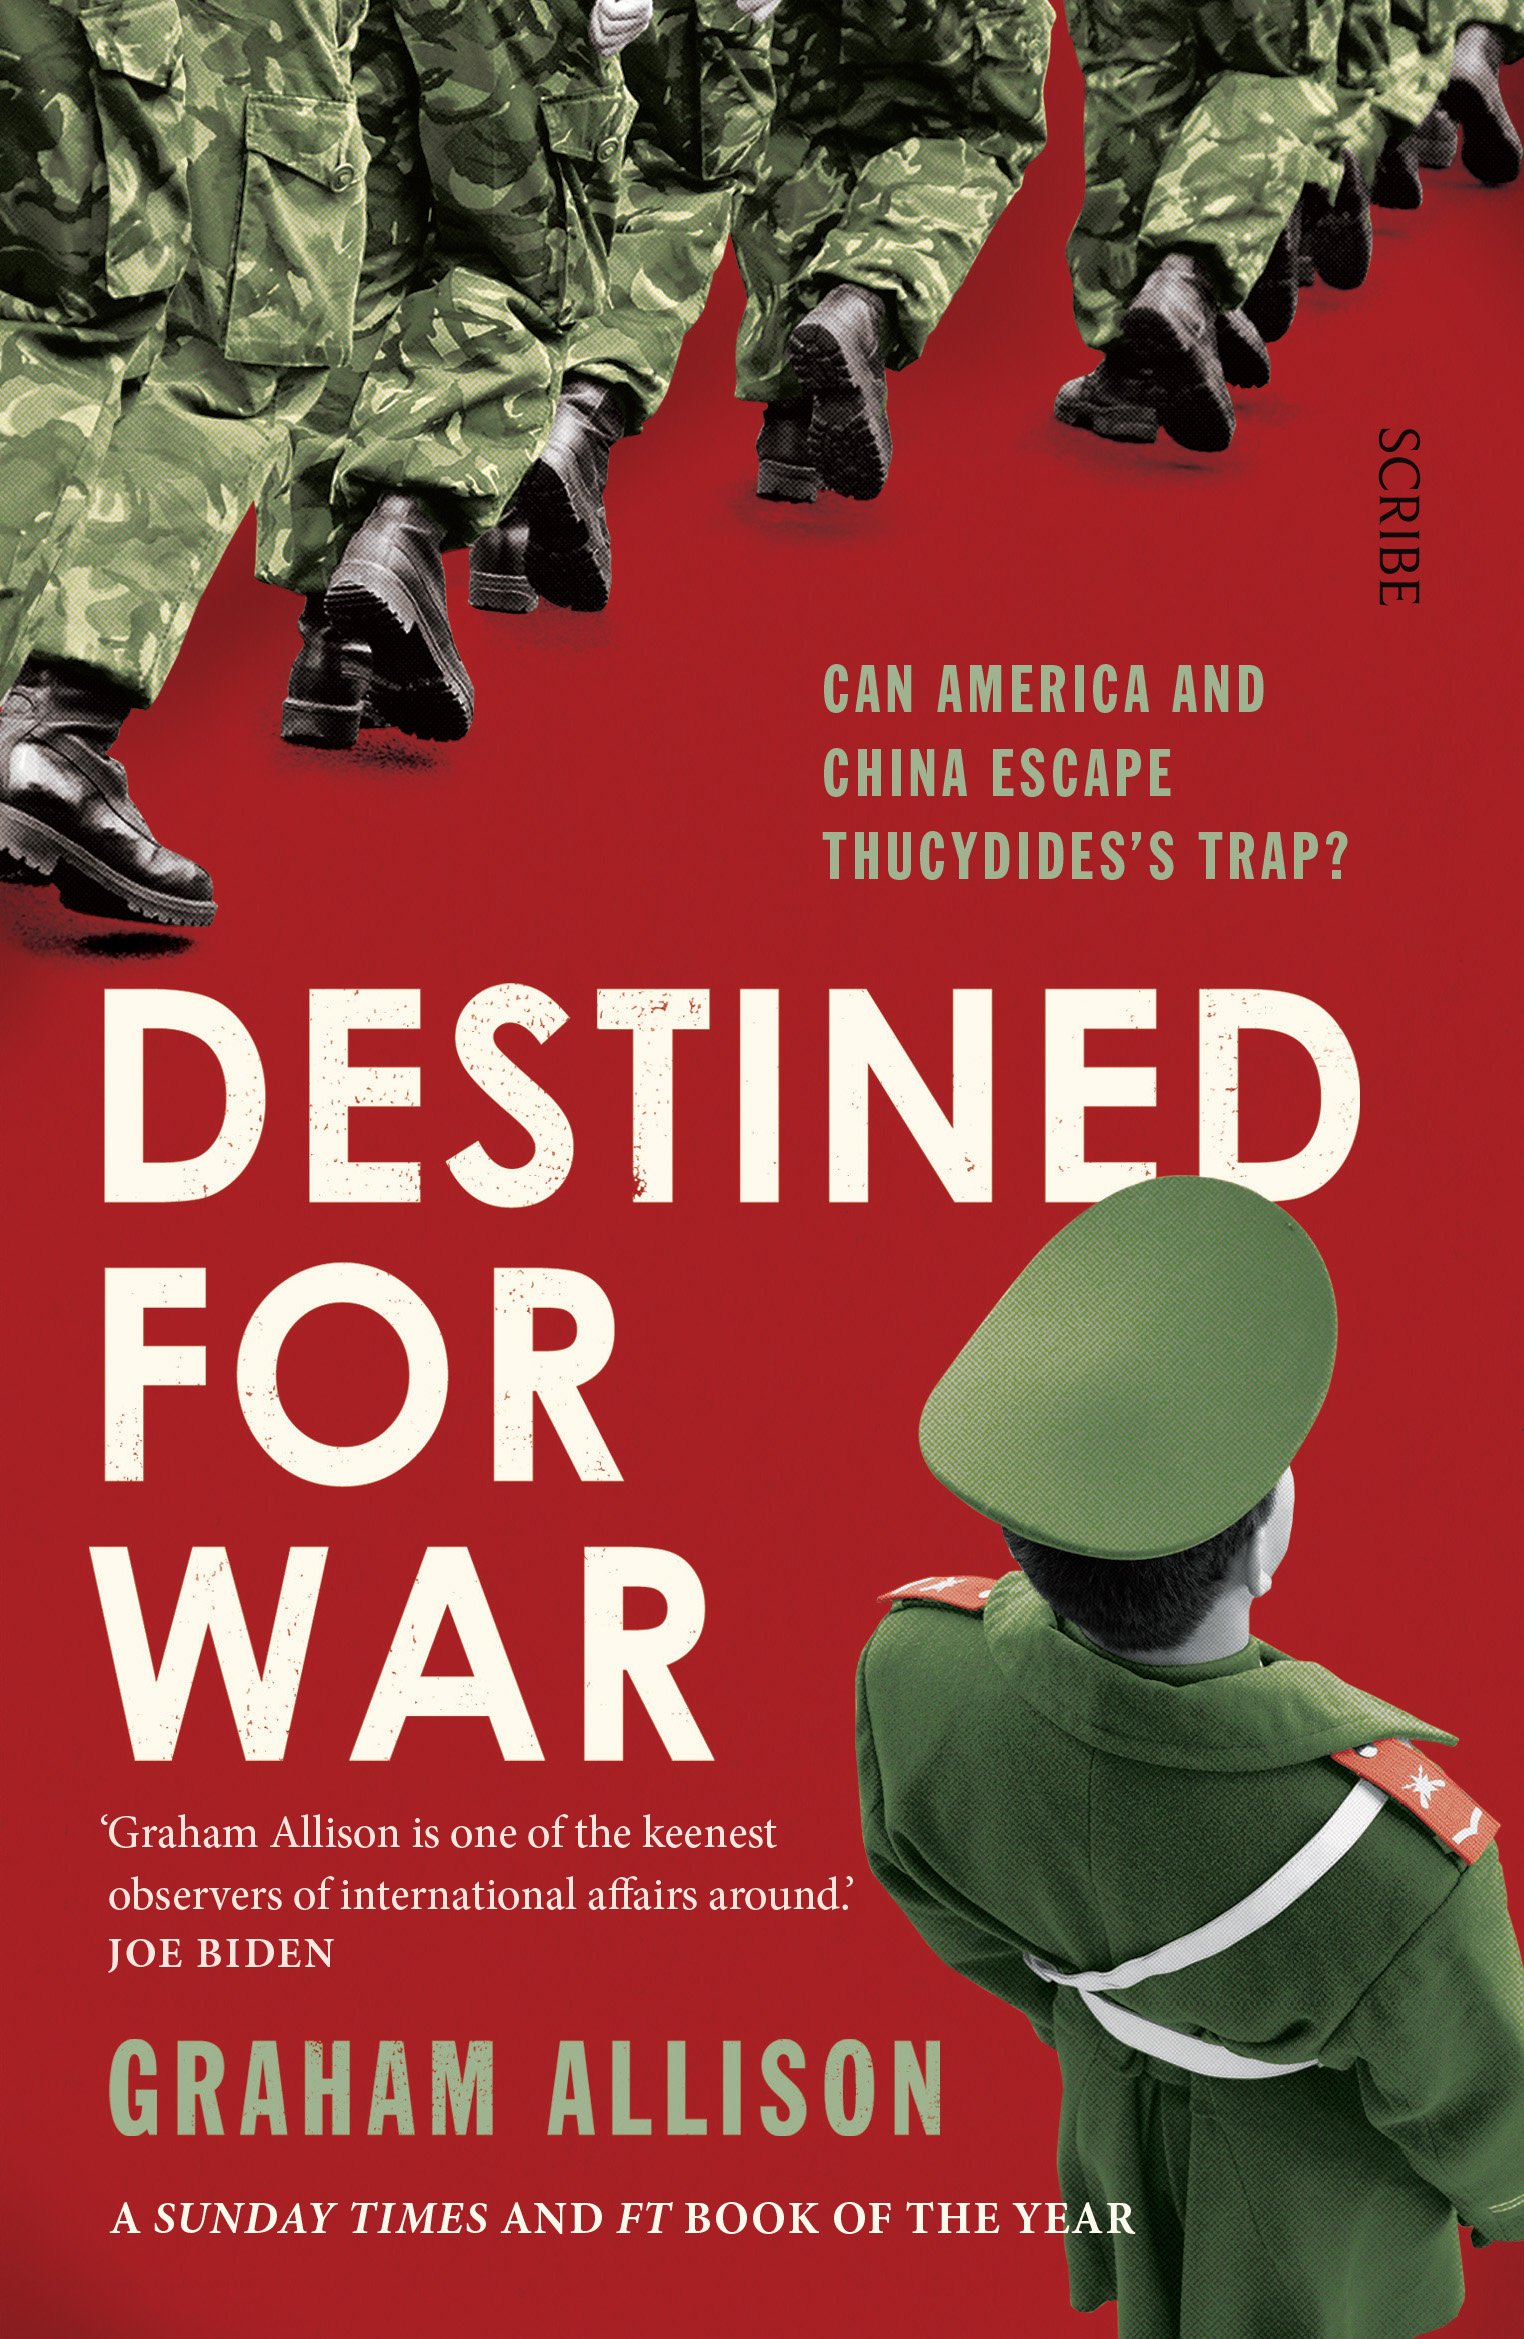 Destined for War: Can America and China Escape Thucydide's Trap